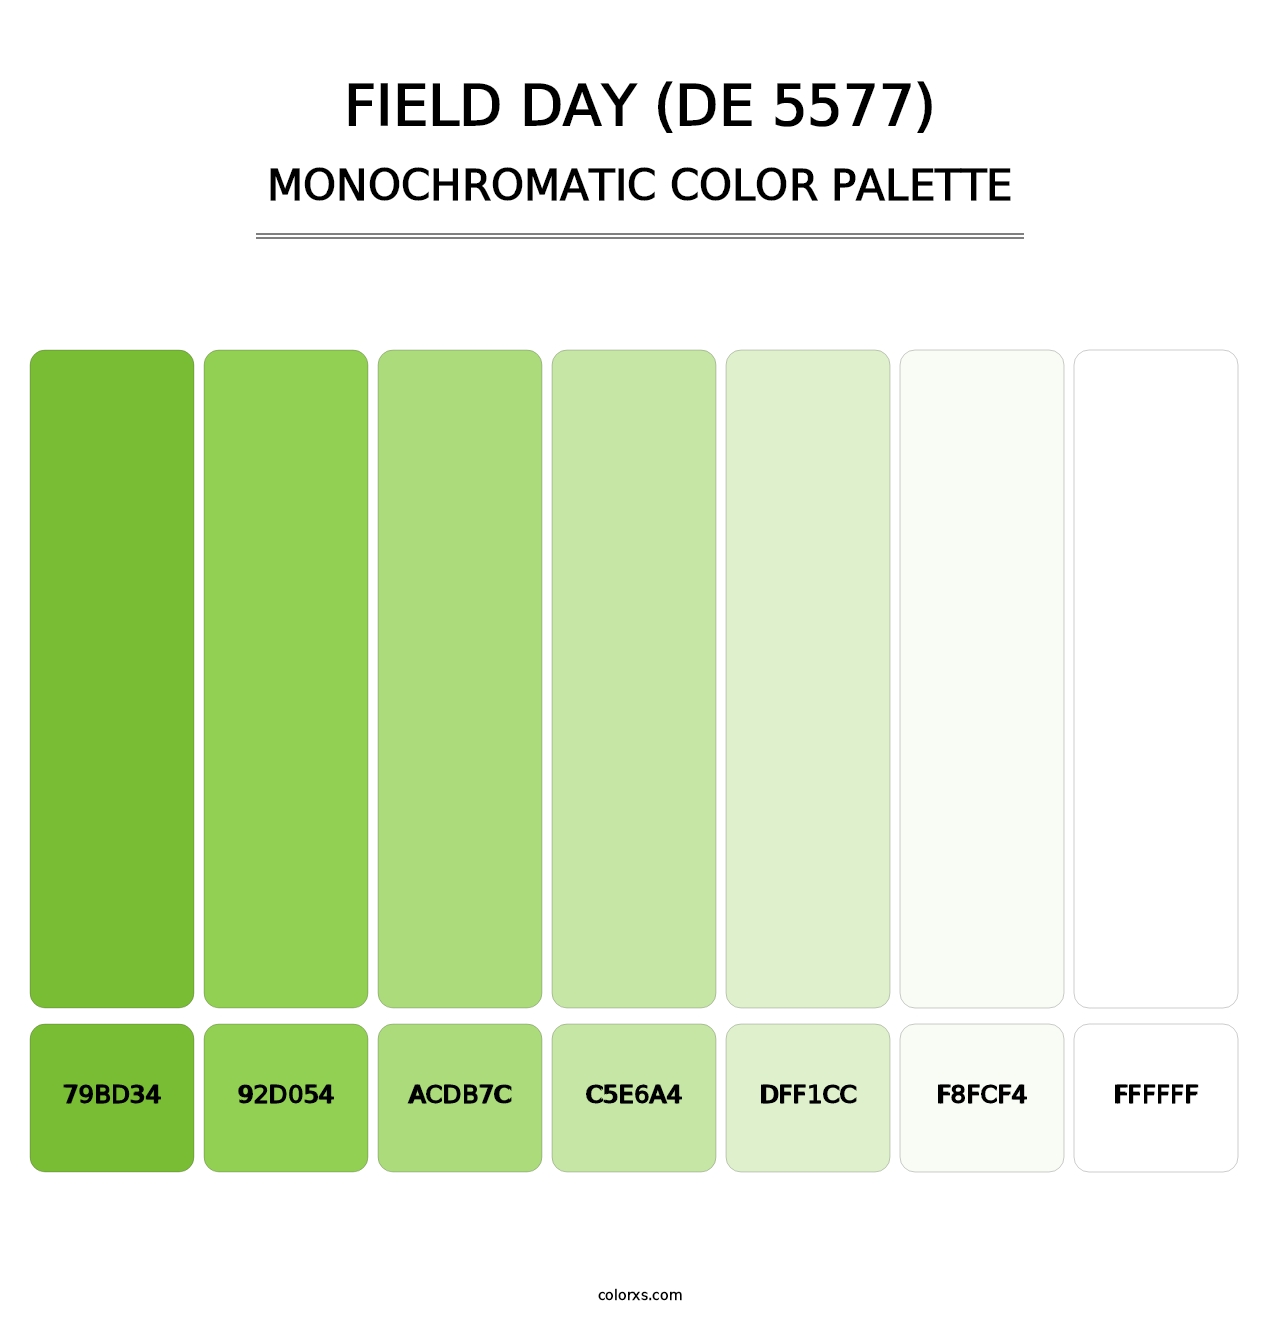 Field Day (DE 5577) - Monochromatic Color Palette